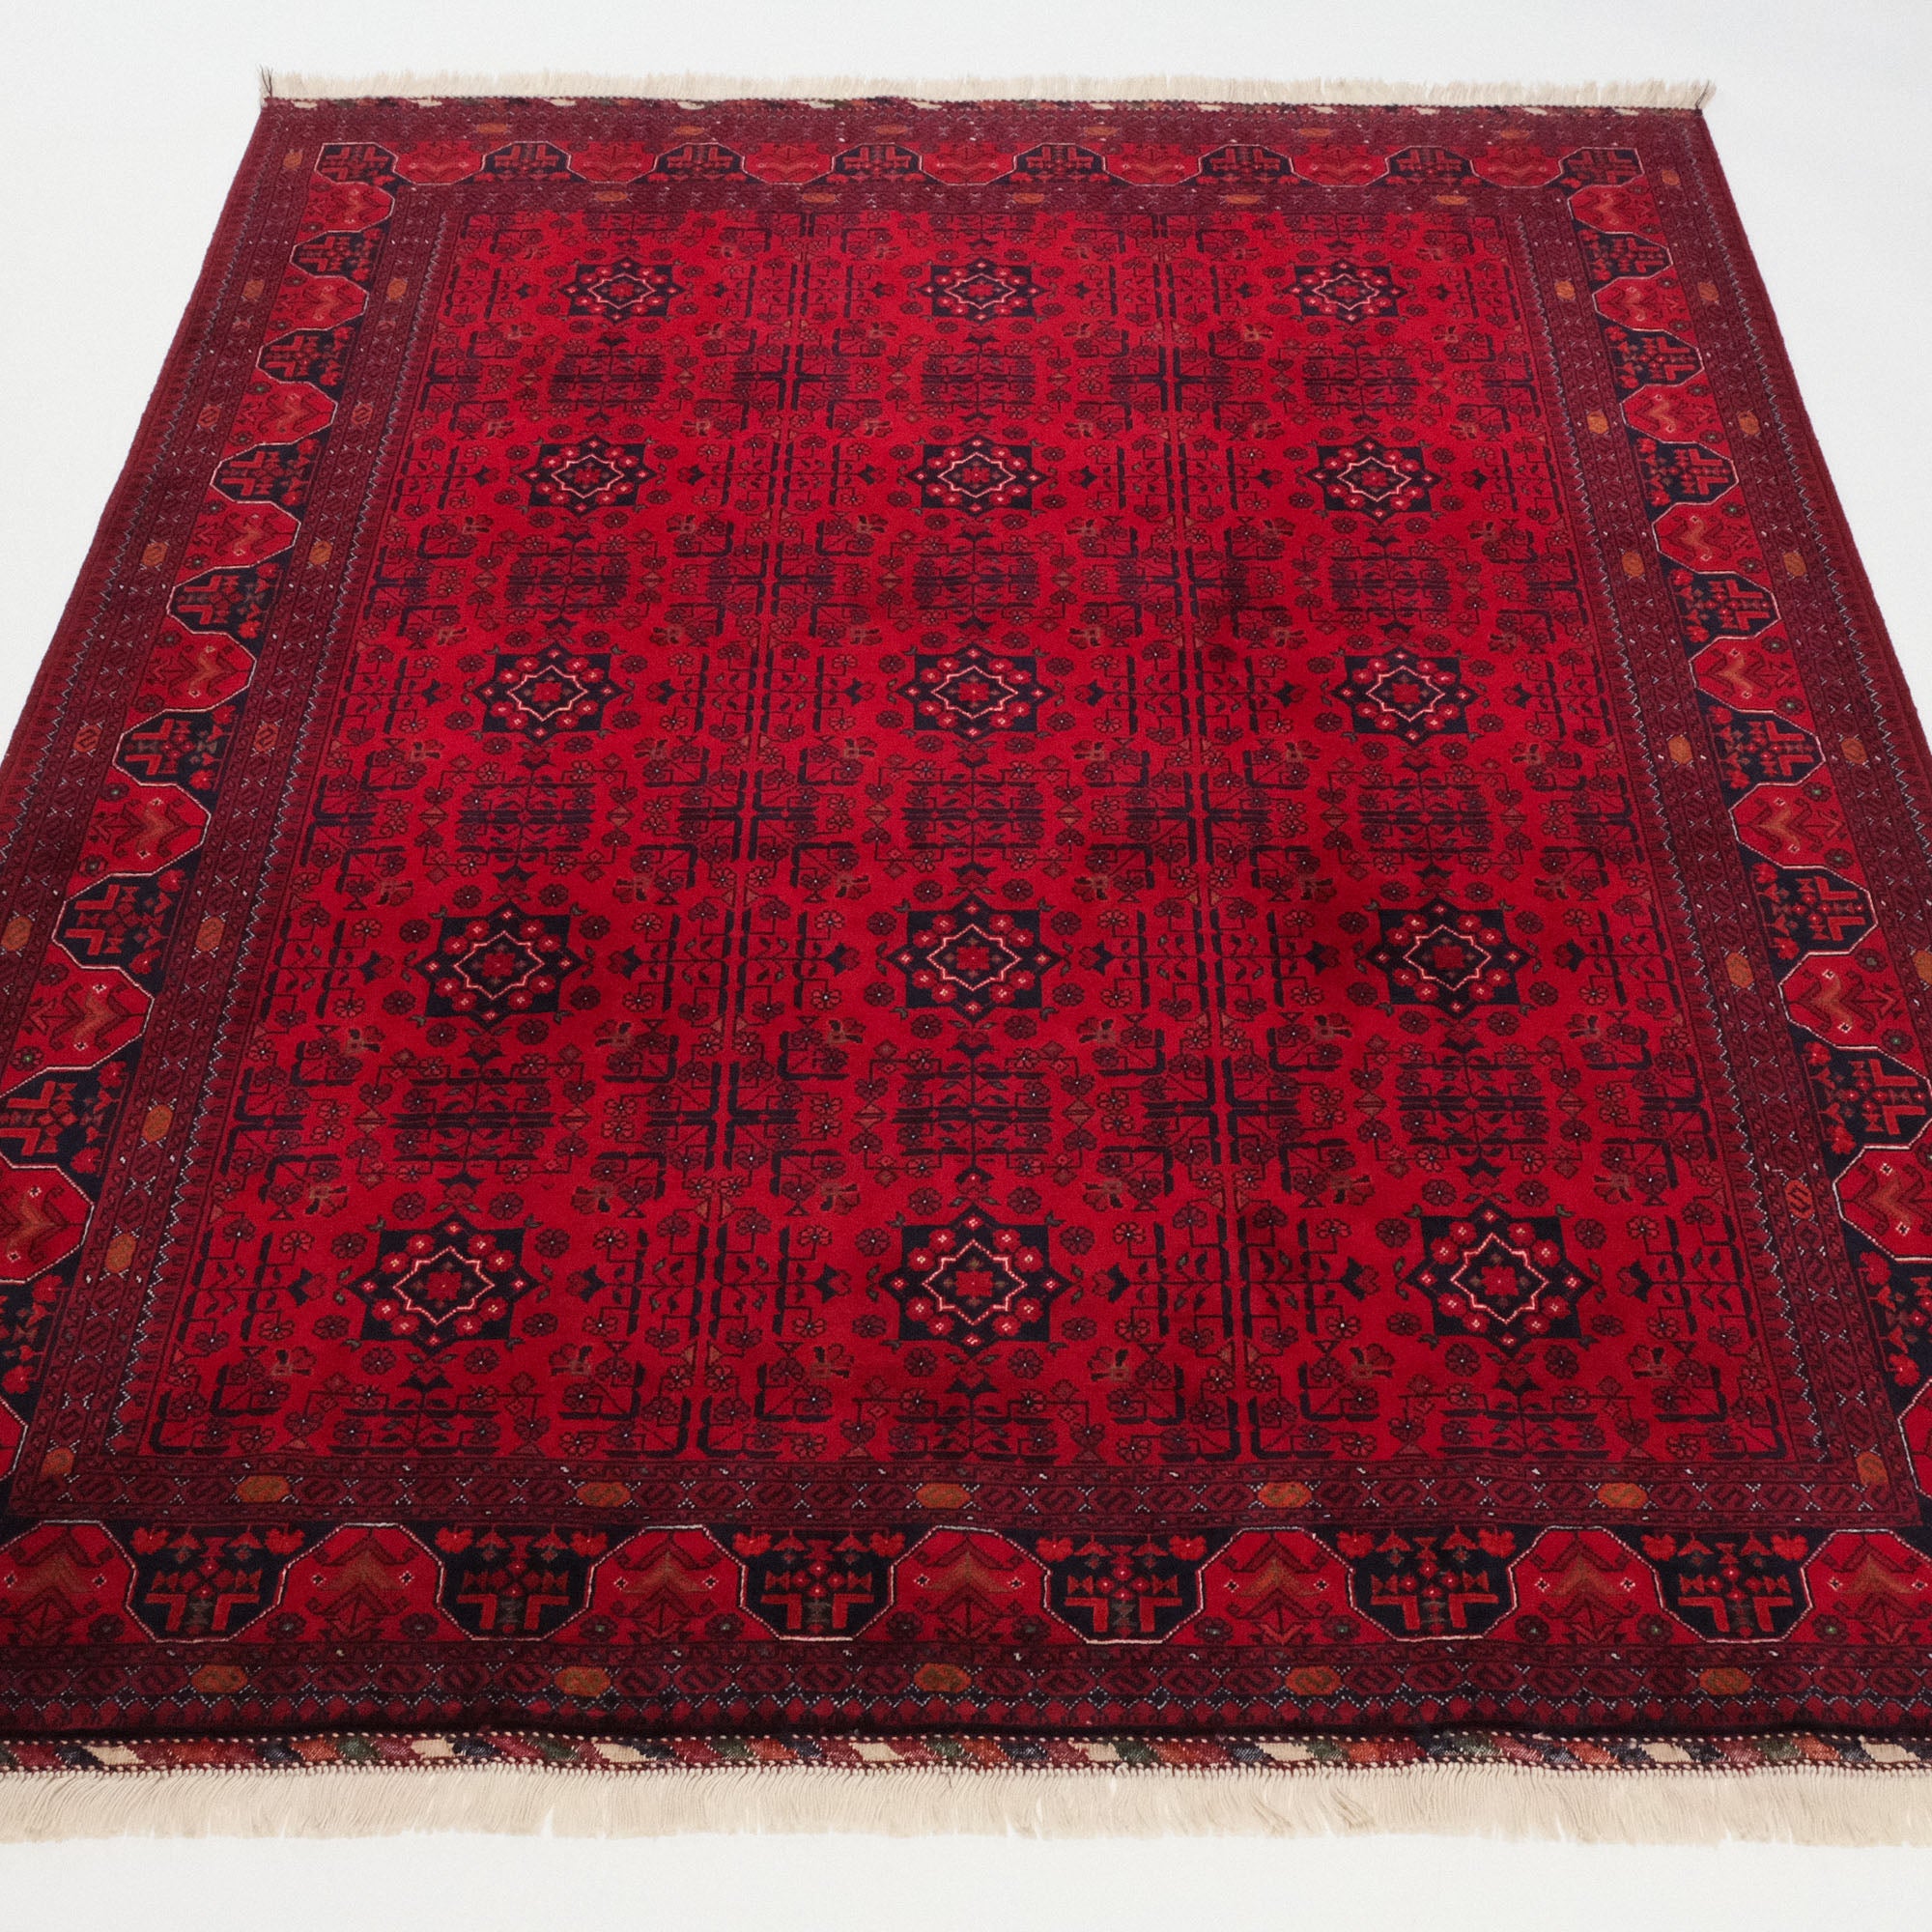 Hand-Woven Afghan Patterned Burgundy Red Wool Bilicik Carpet